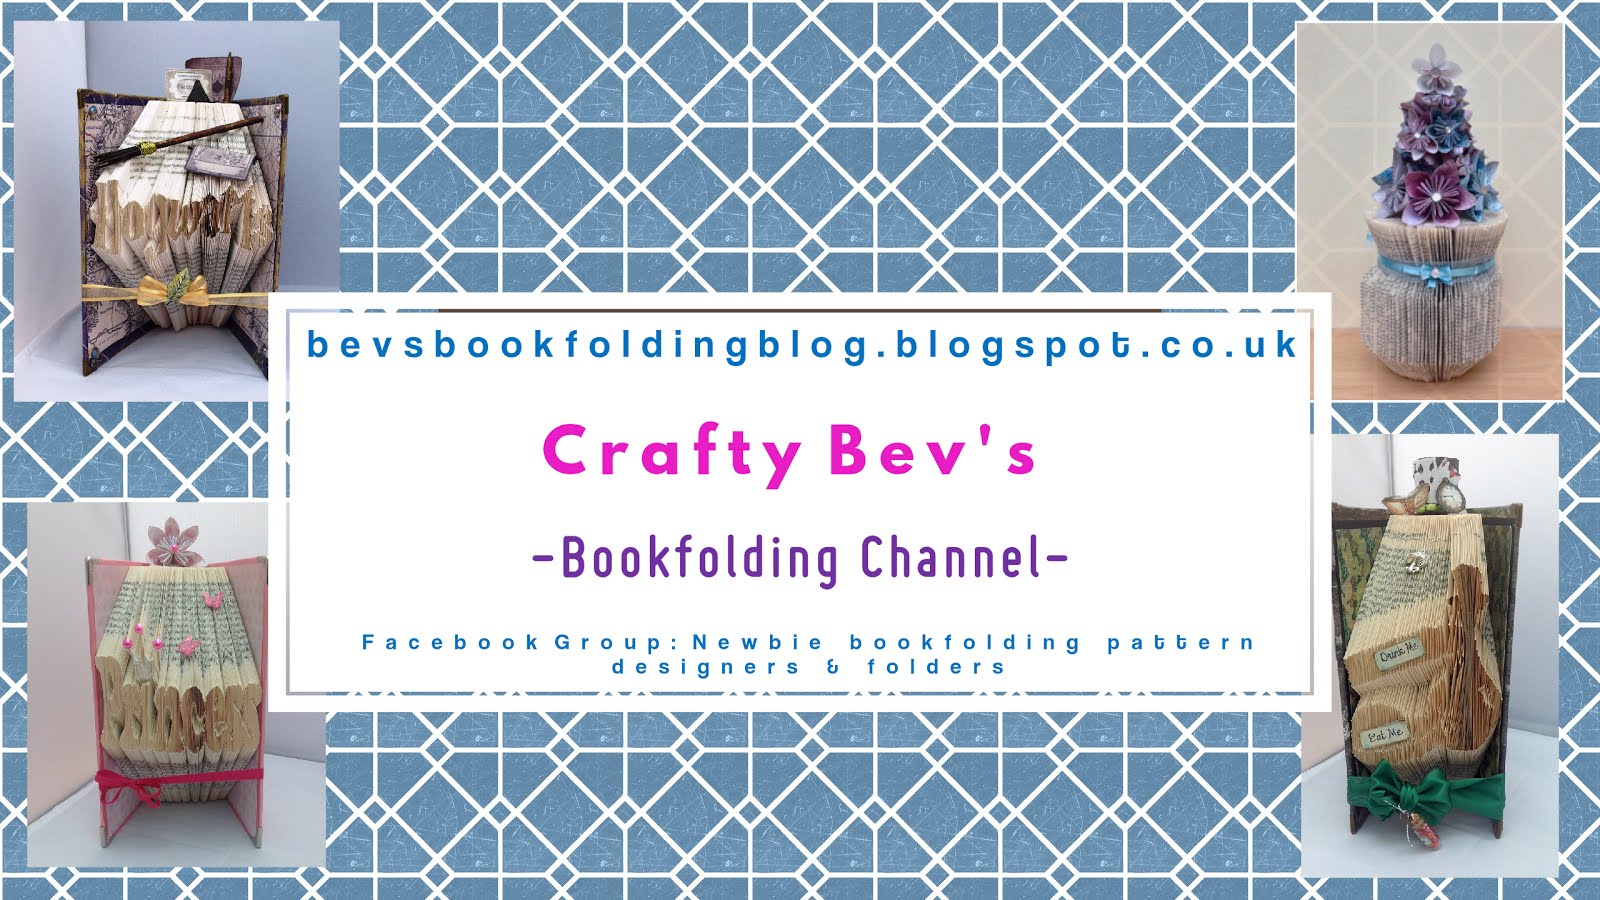 Crafty Bev's Bookfolding Channel